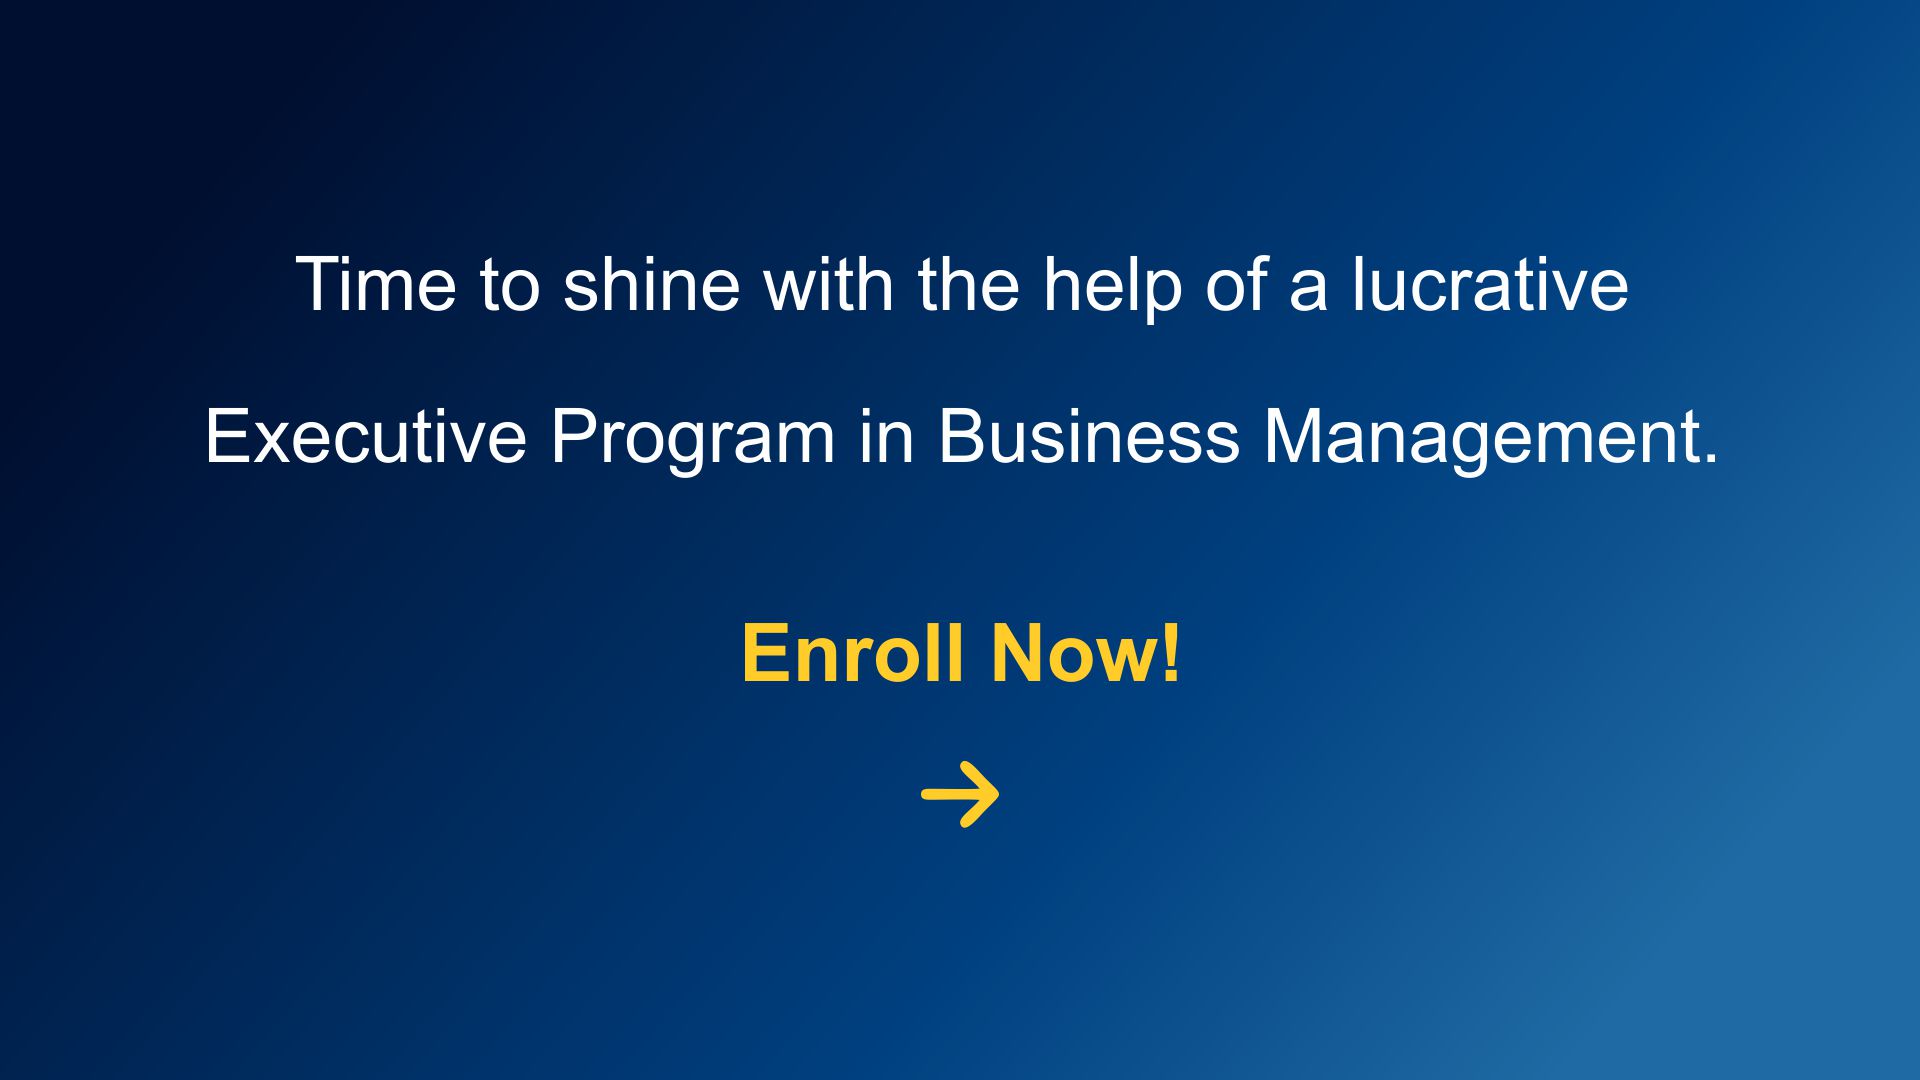 Executive Program in Business Management Jaro